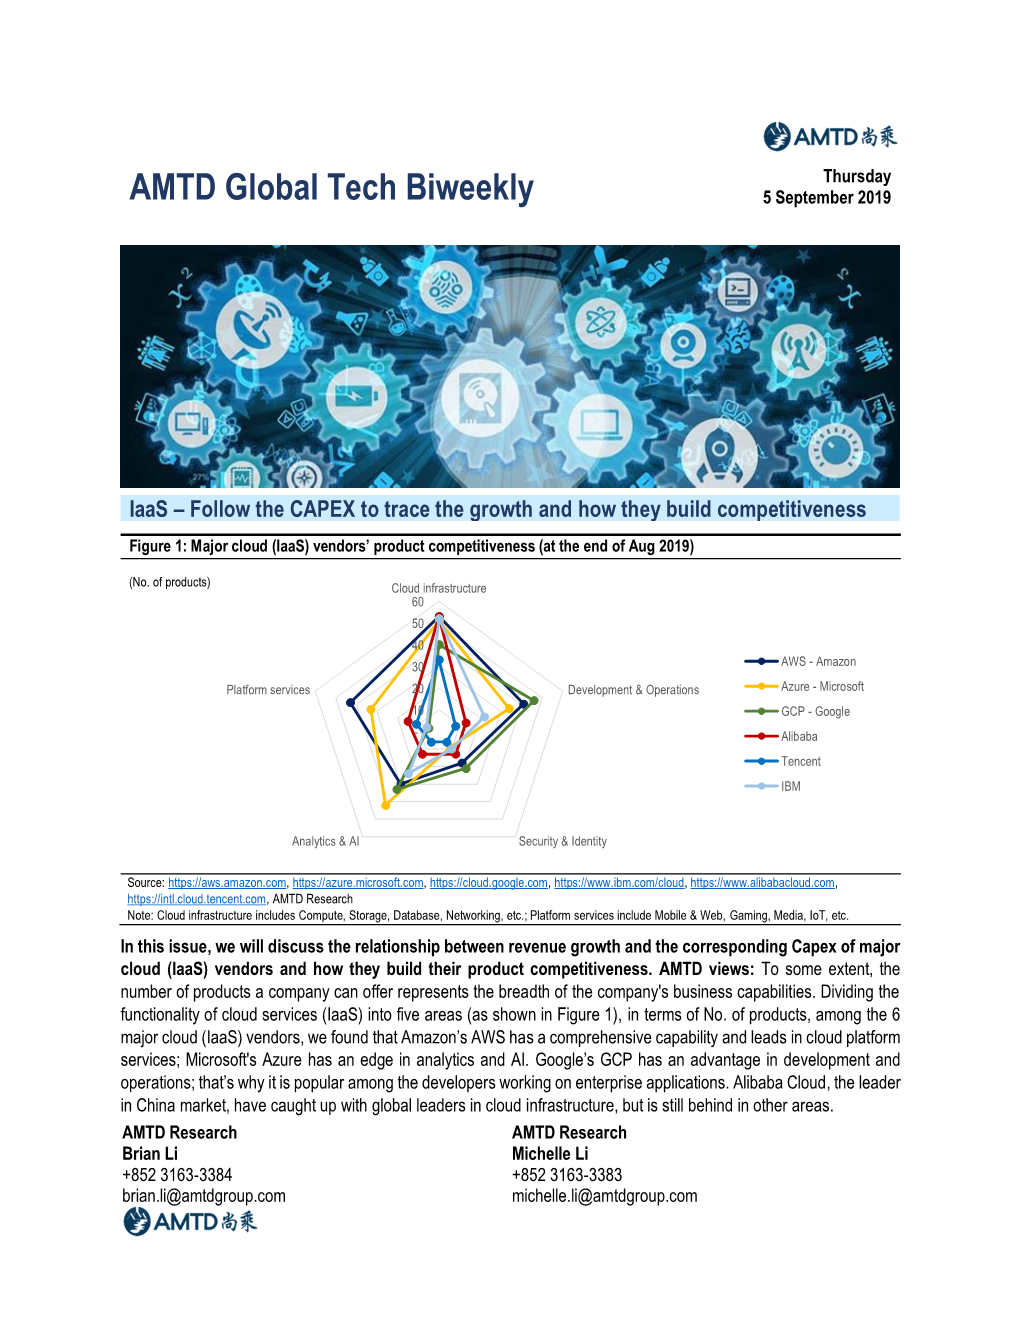 AMTD Global Tech Biweekly 5 September 2019